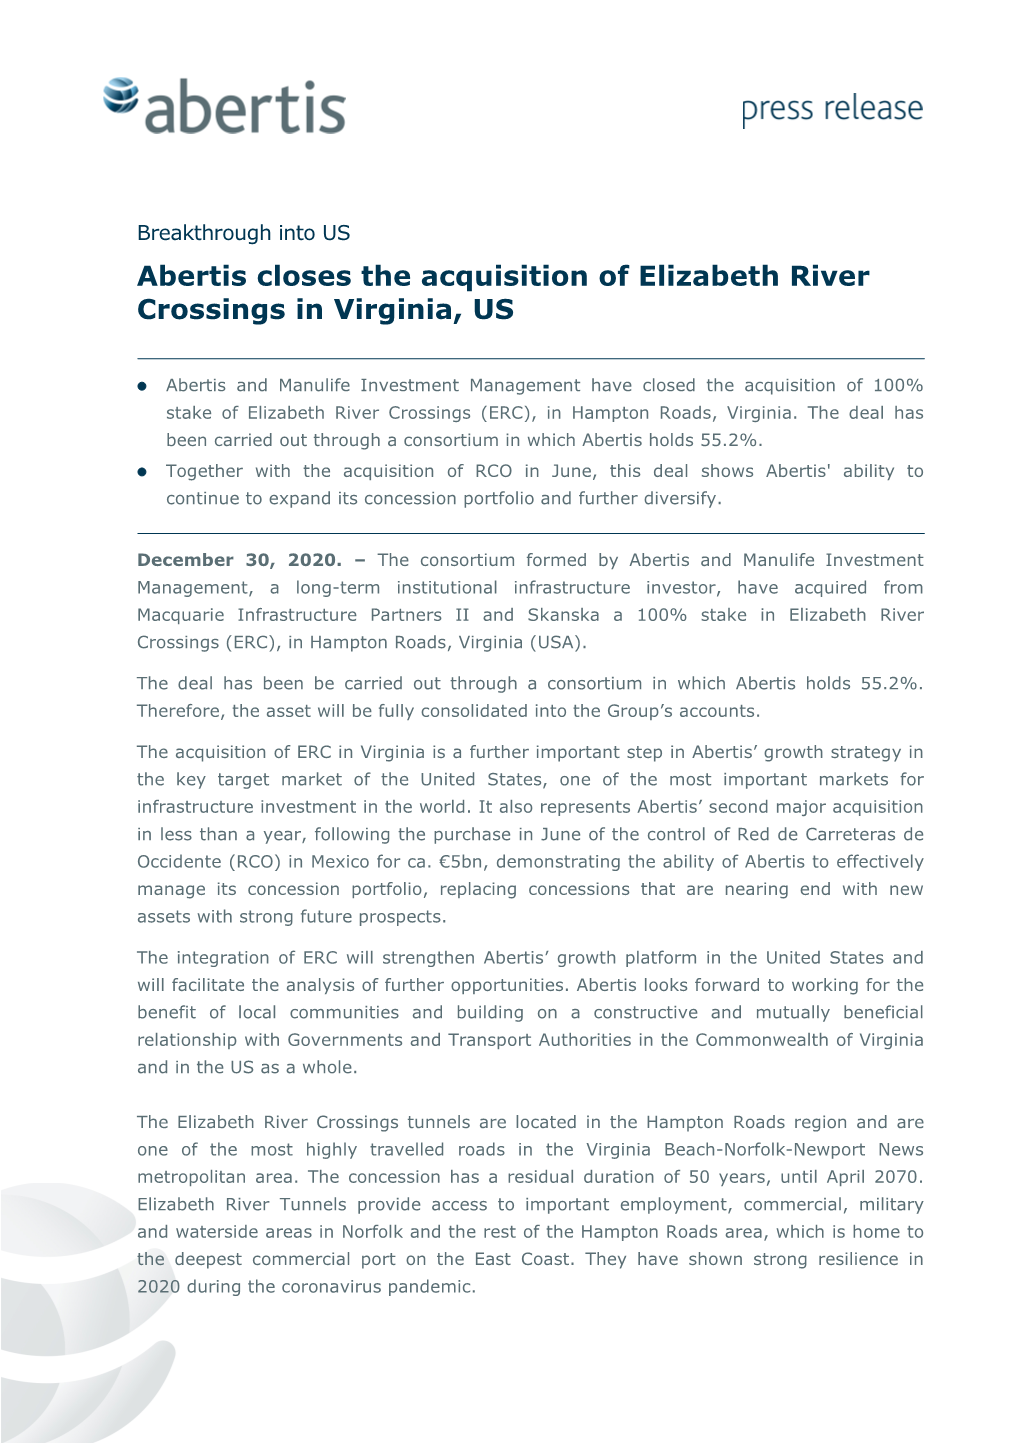 Abertis Closes the Acquisition of Elizabeth River Crossings in Virginia, US